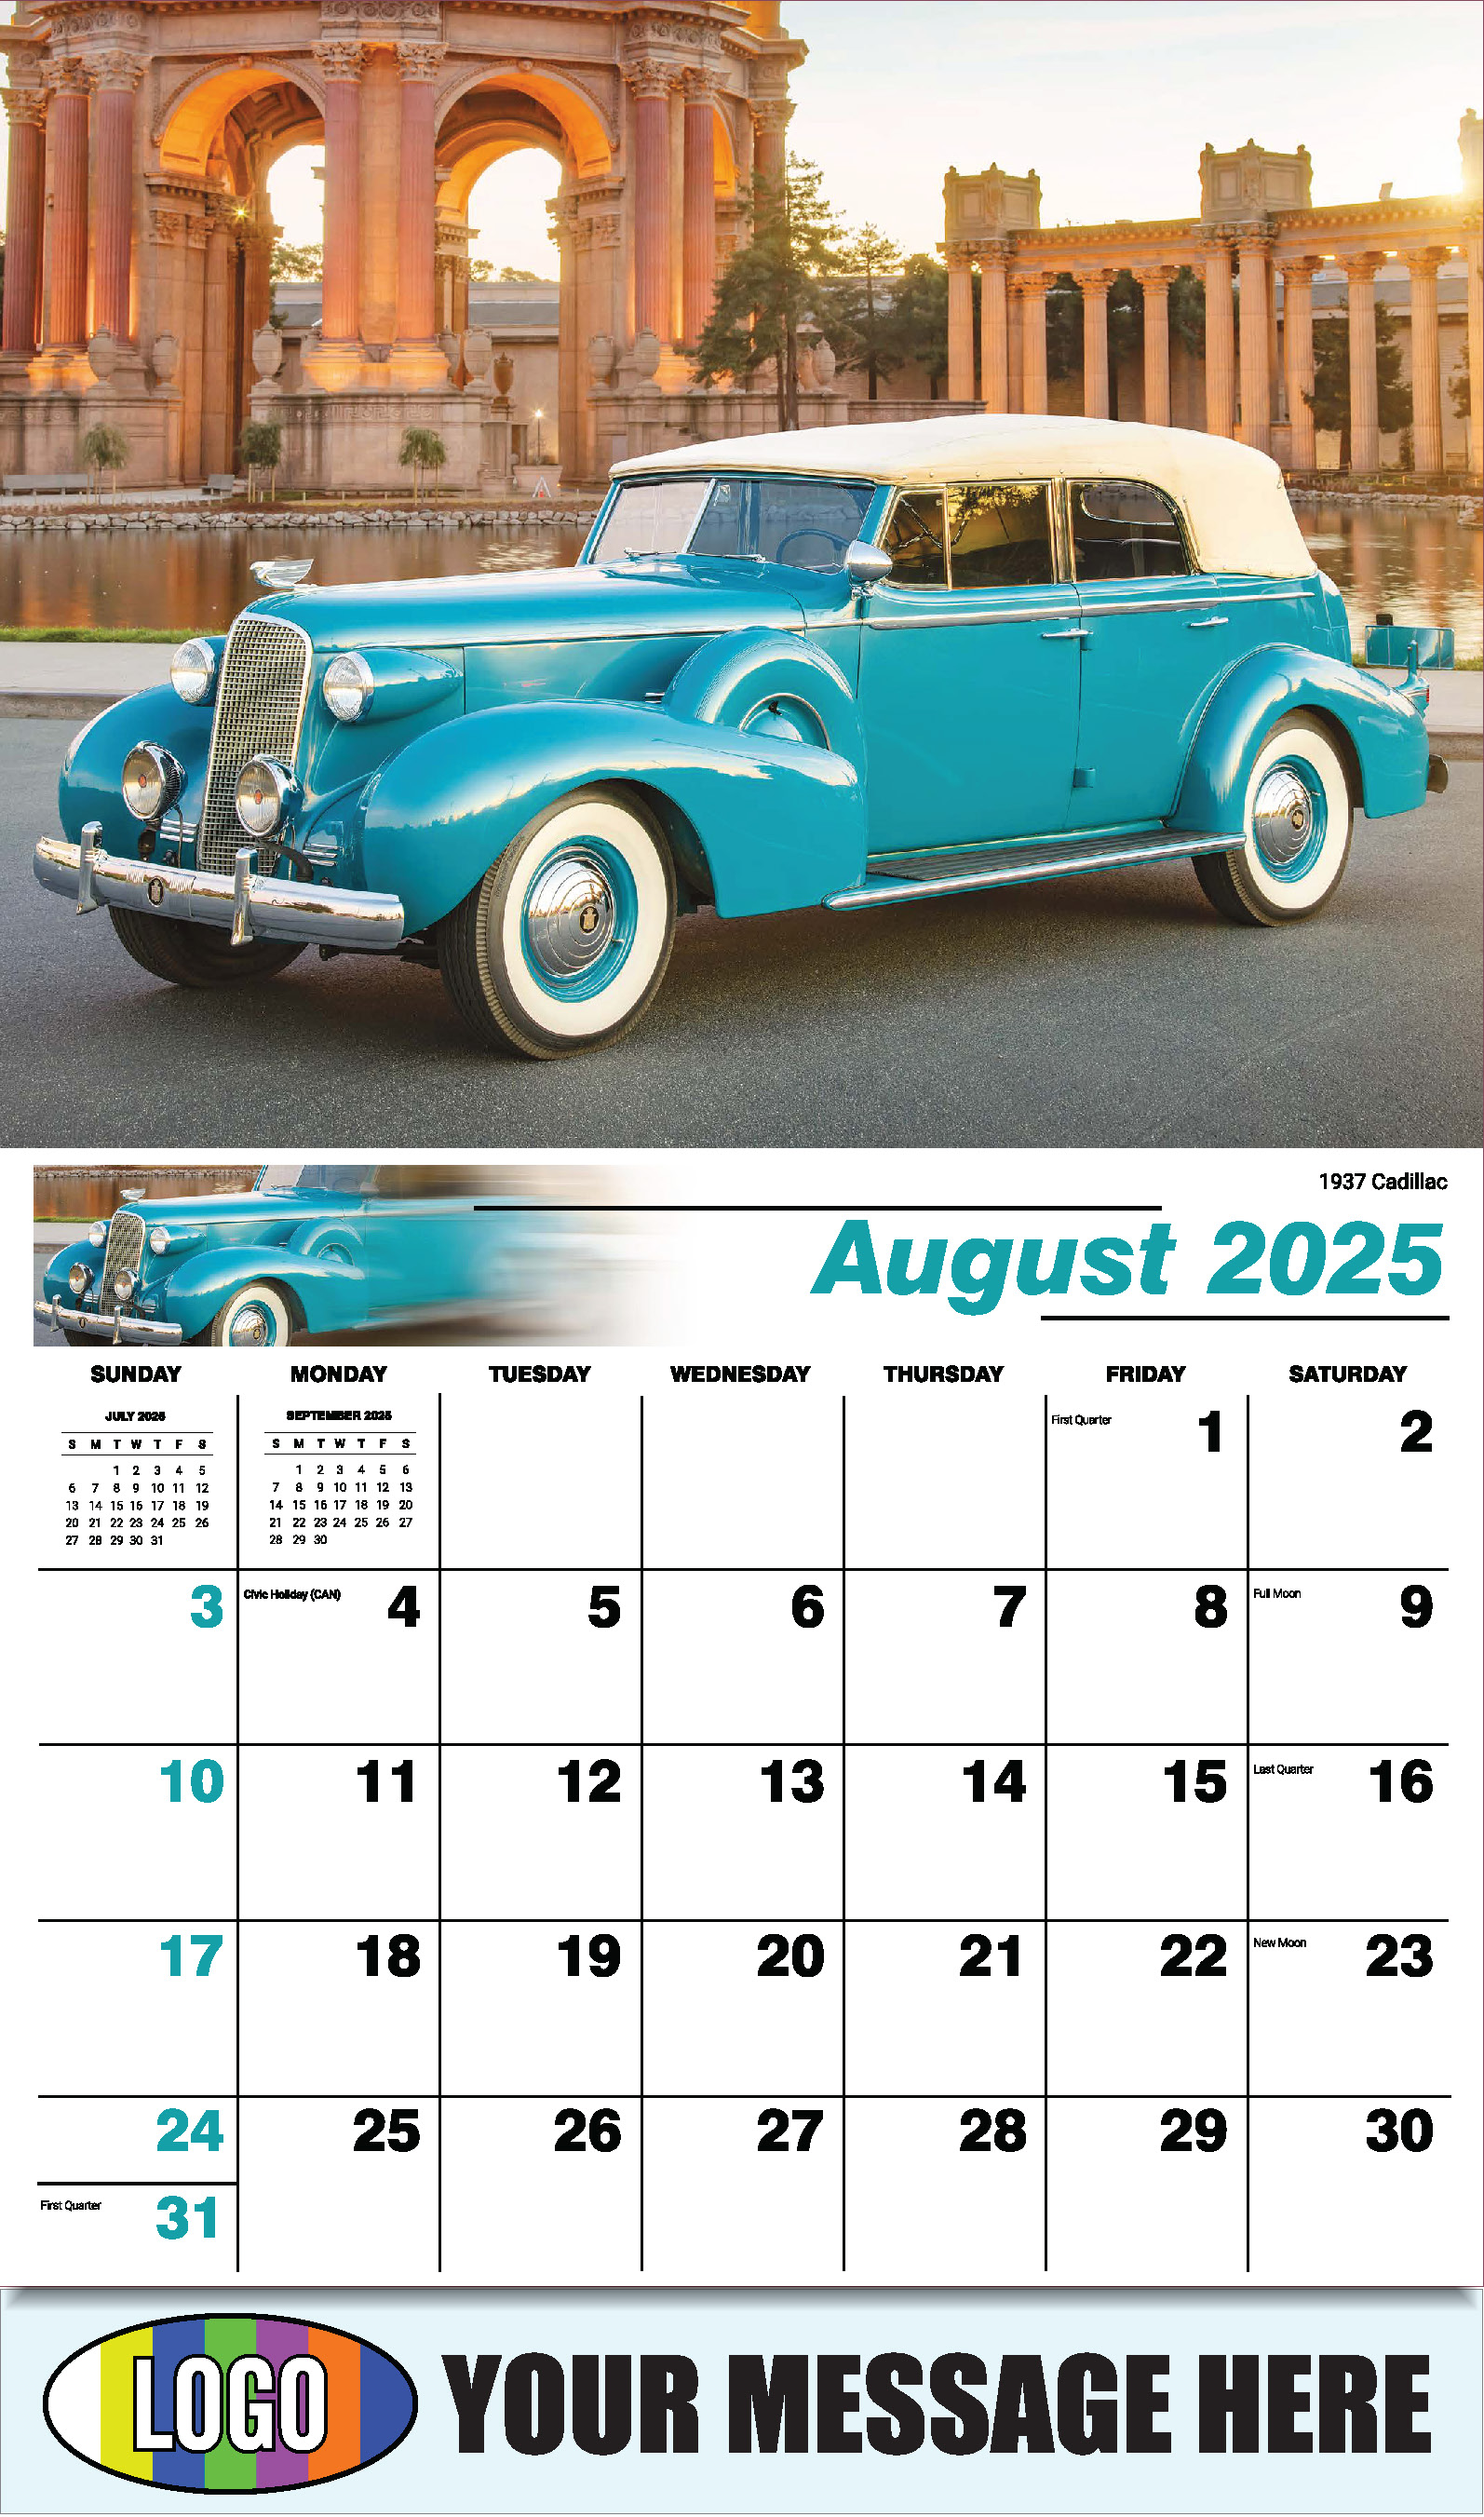 Classic Cars 2025 Automotive Business Promo Calendar - August